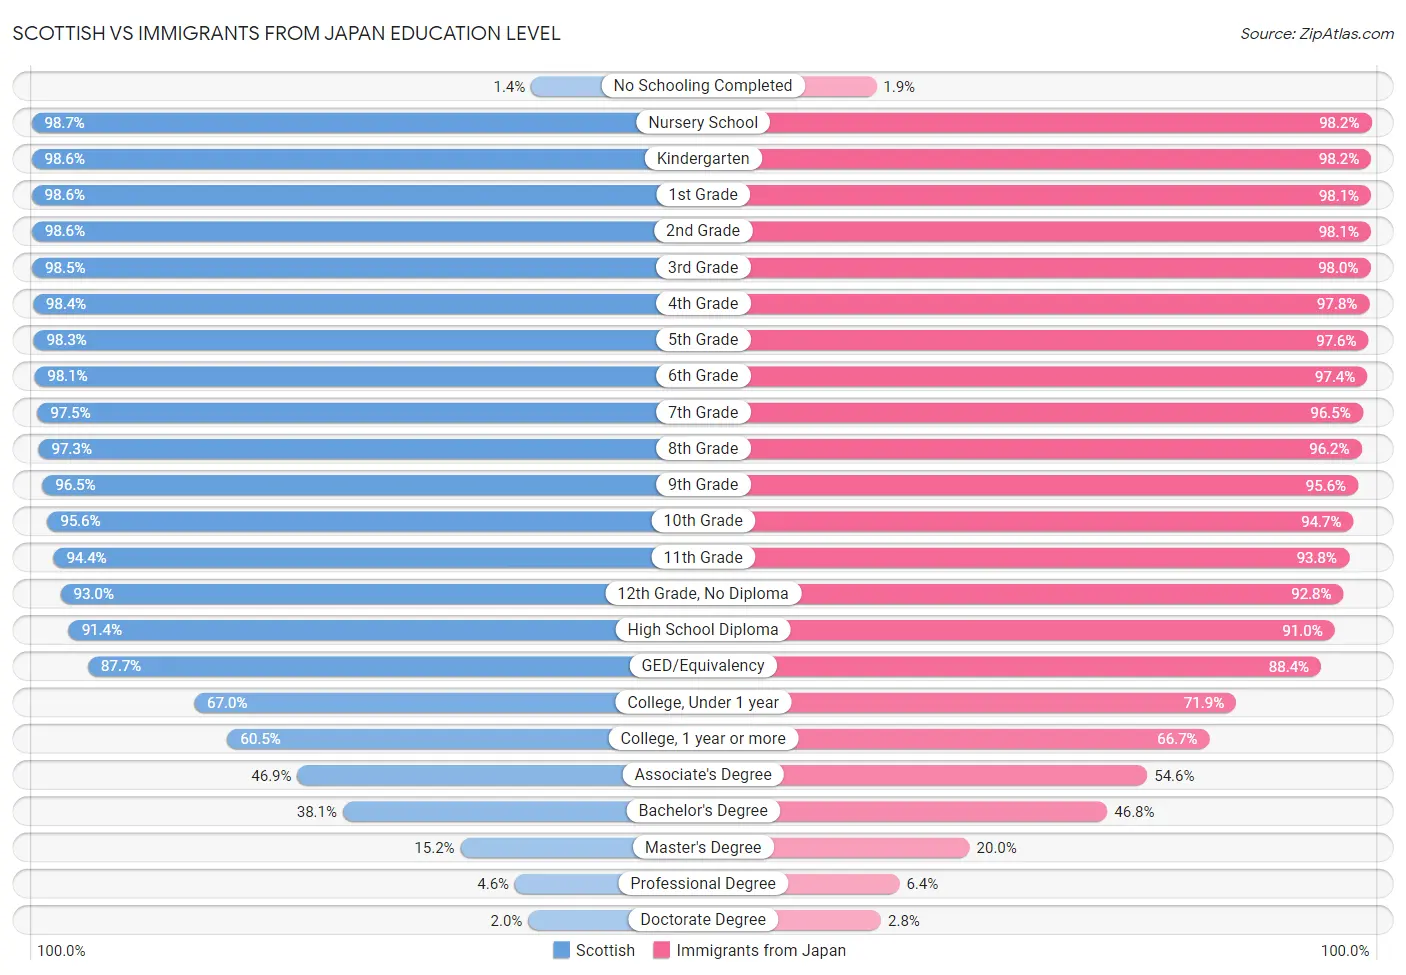 Scottish vs Immigrants from Japan Education Level